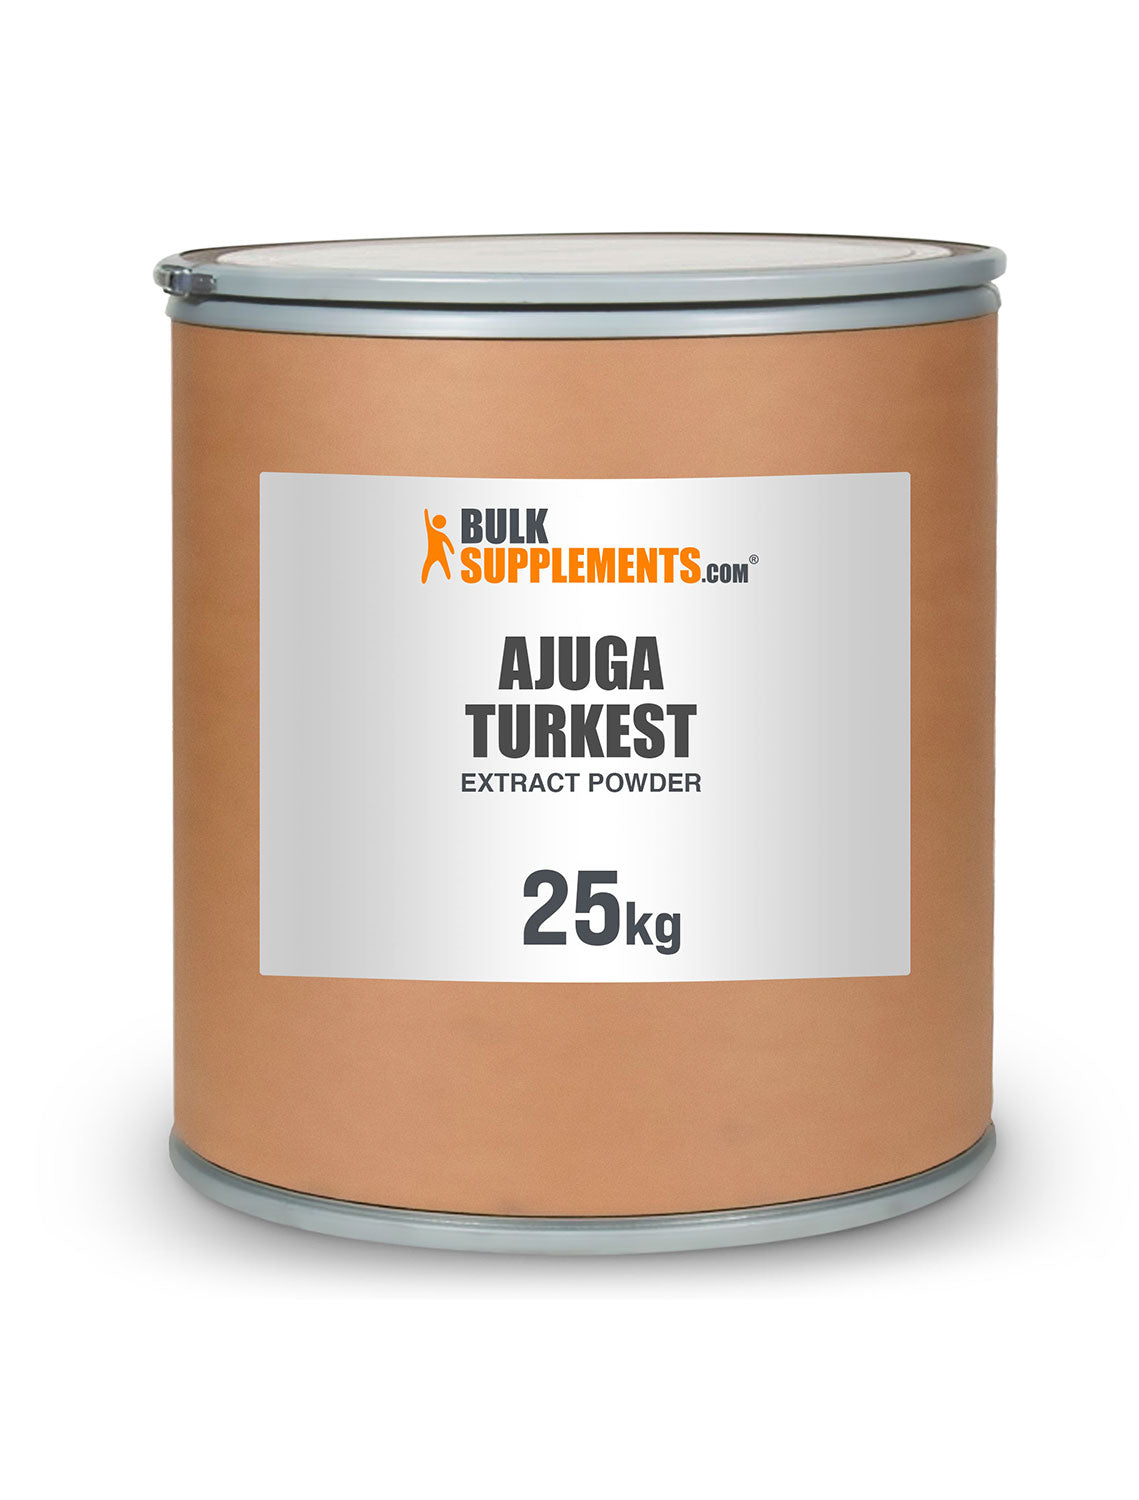 Ajuga Turkest Extract Powder 25kg can